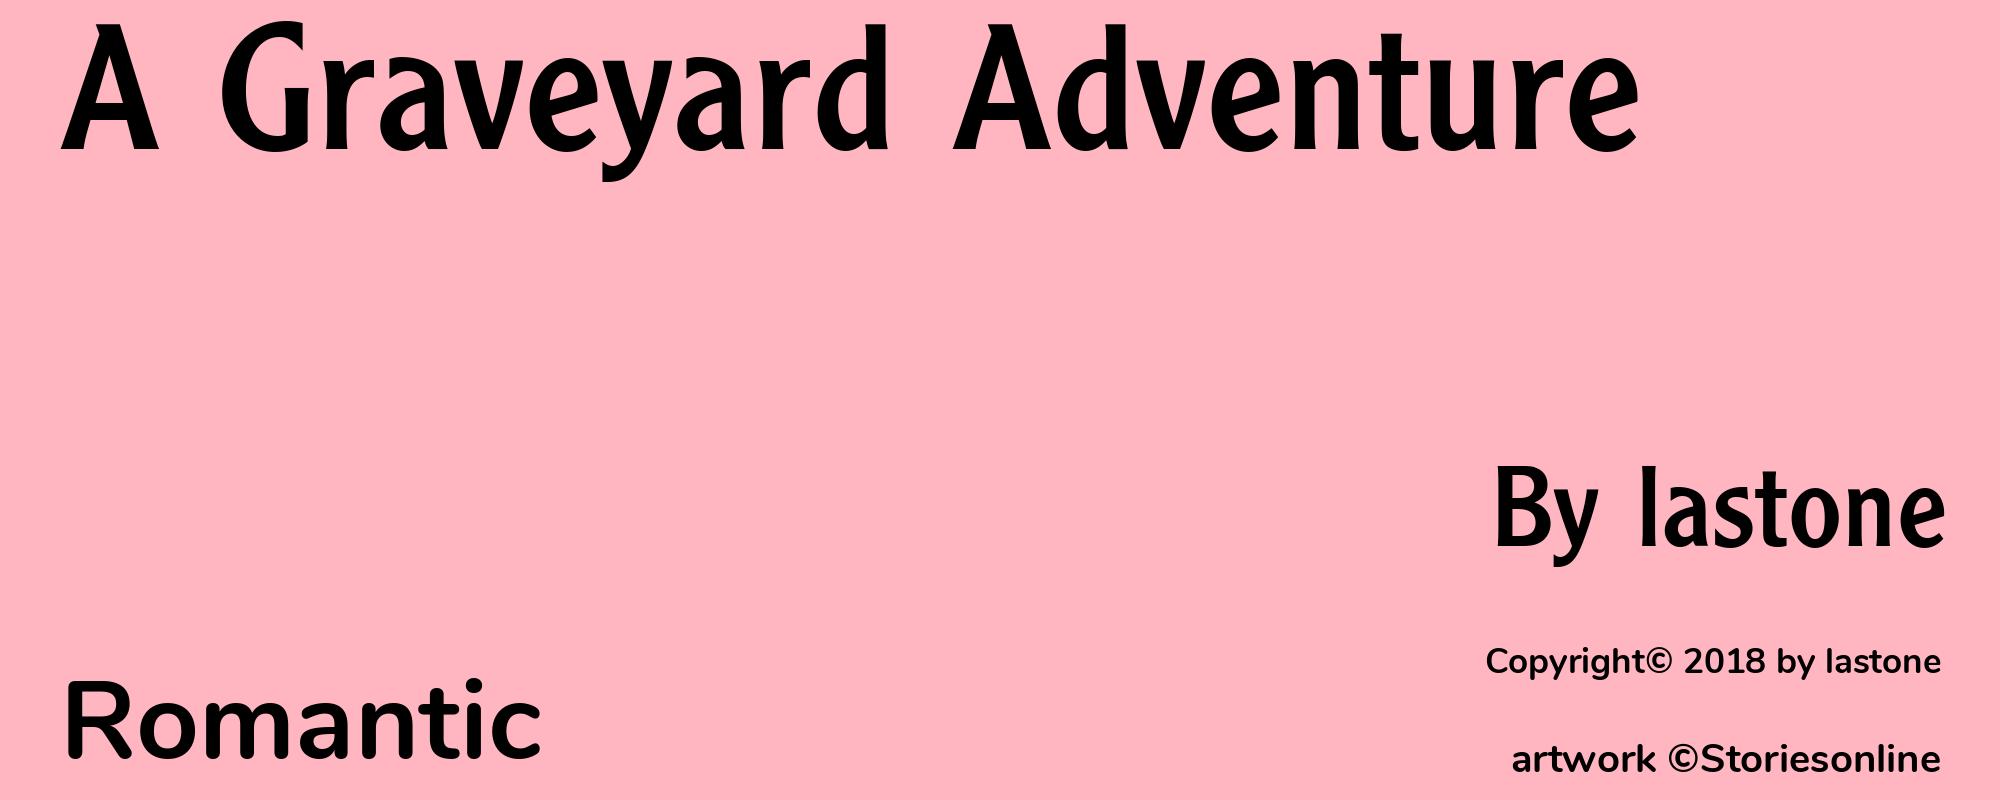 A Graveyard Adventure - Cover